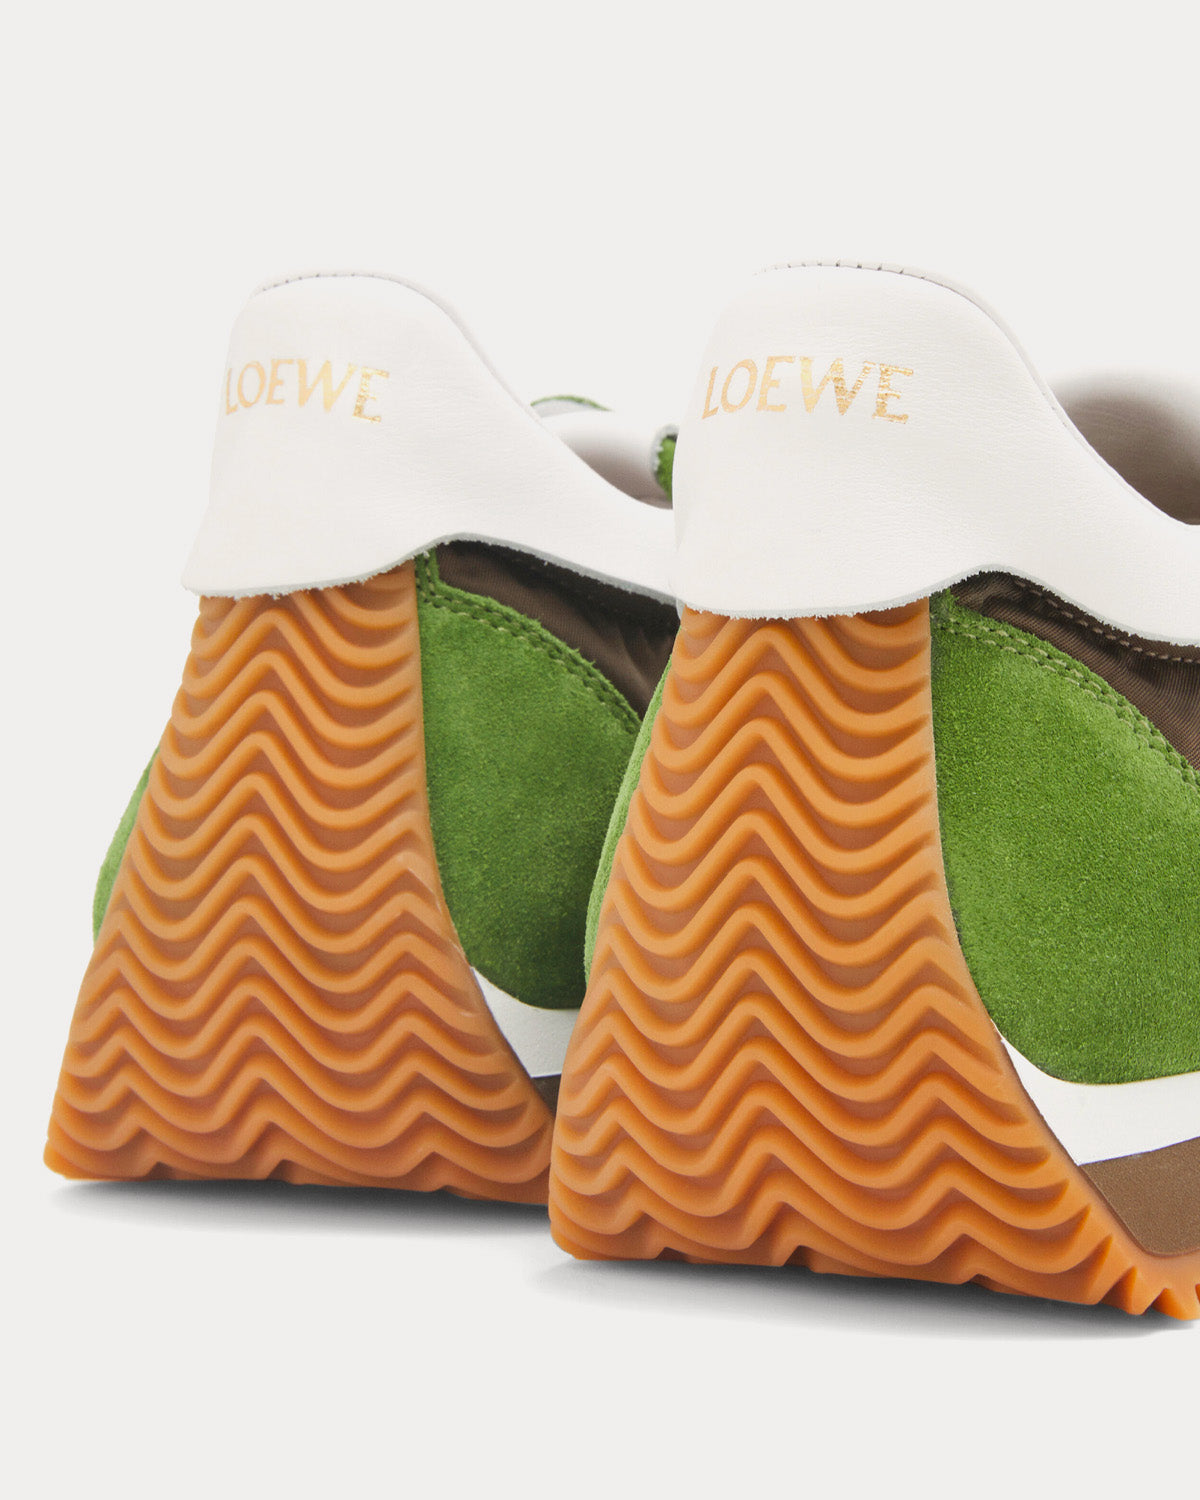 Loewe x Paula's Ibiza - Flow Runner Calfskin & Nylon Green / Brown Low Top Sneakers